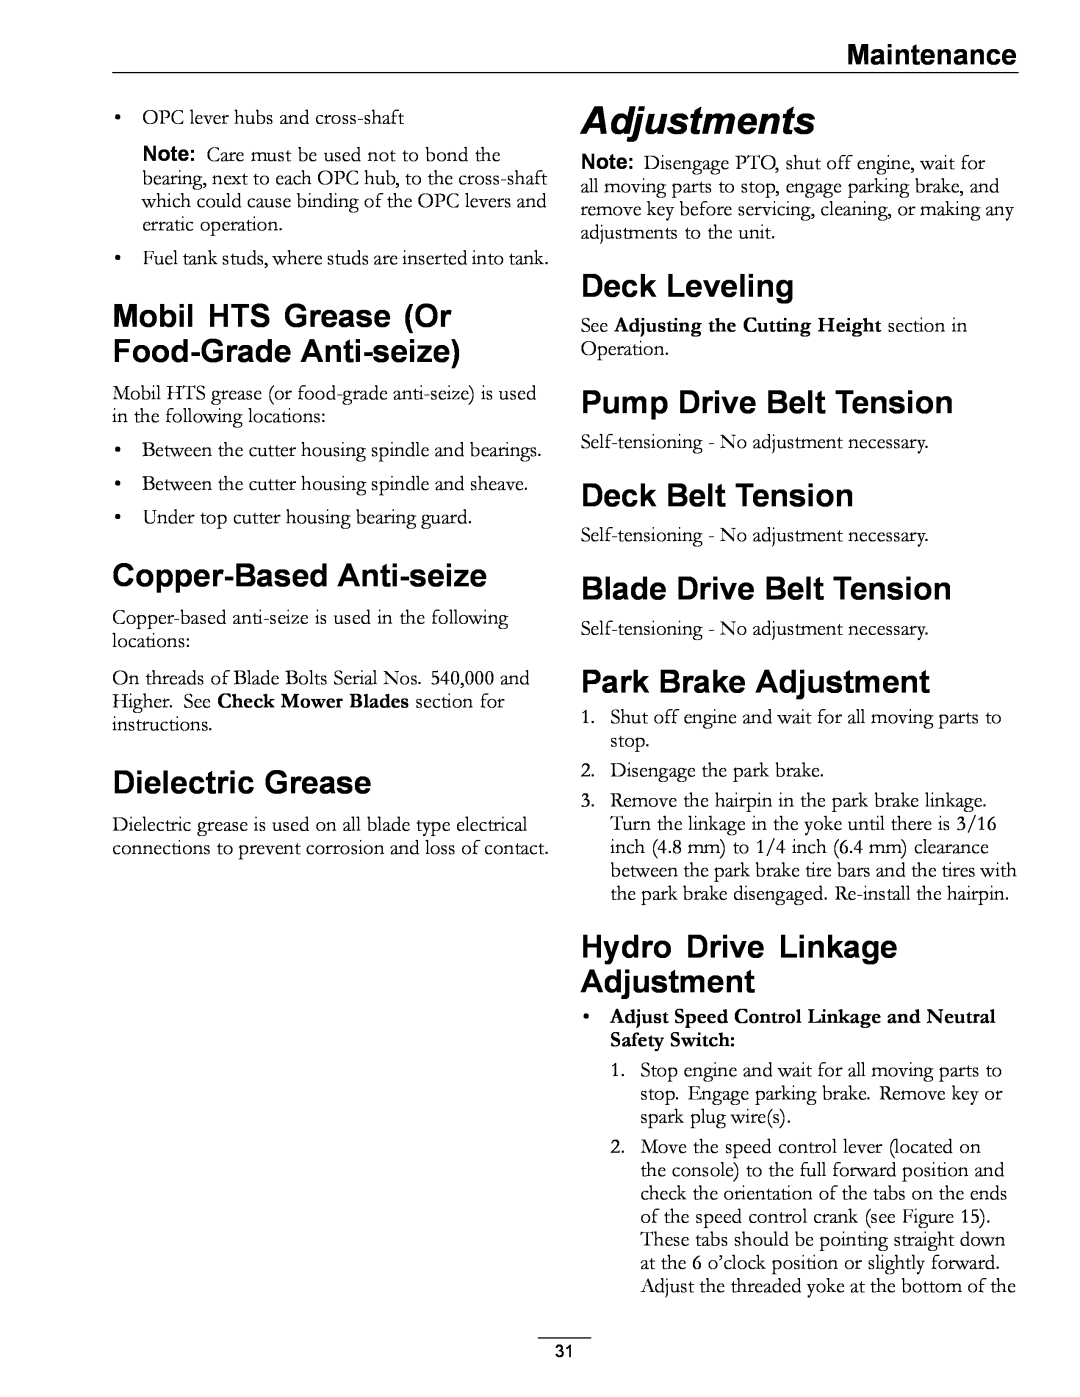 Exmark 4500-528 manual Adjustments, Mobil HTS Grease Or Food-Grade Anti-seize, Deck Leveling, Pump Drive Belt Tension 